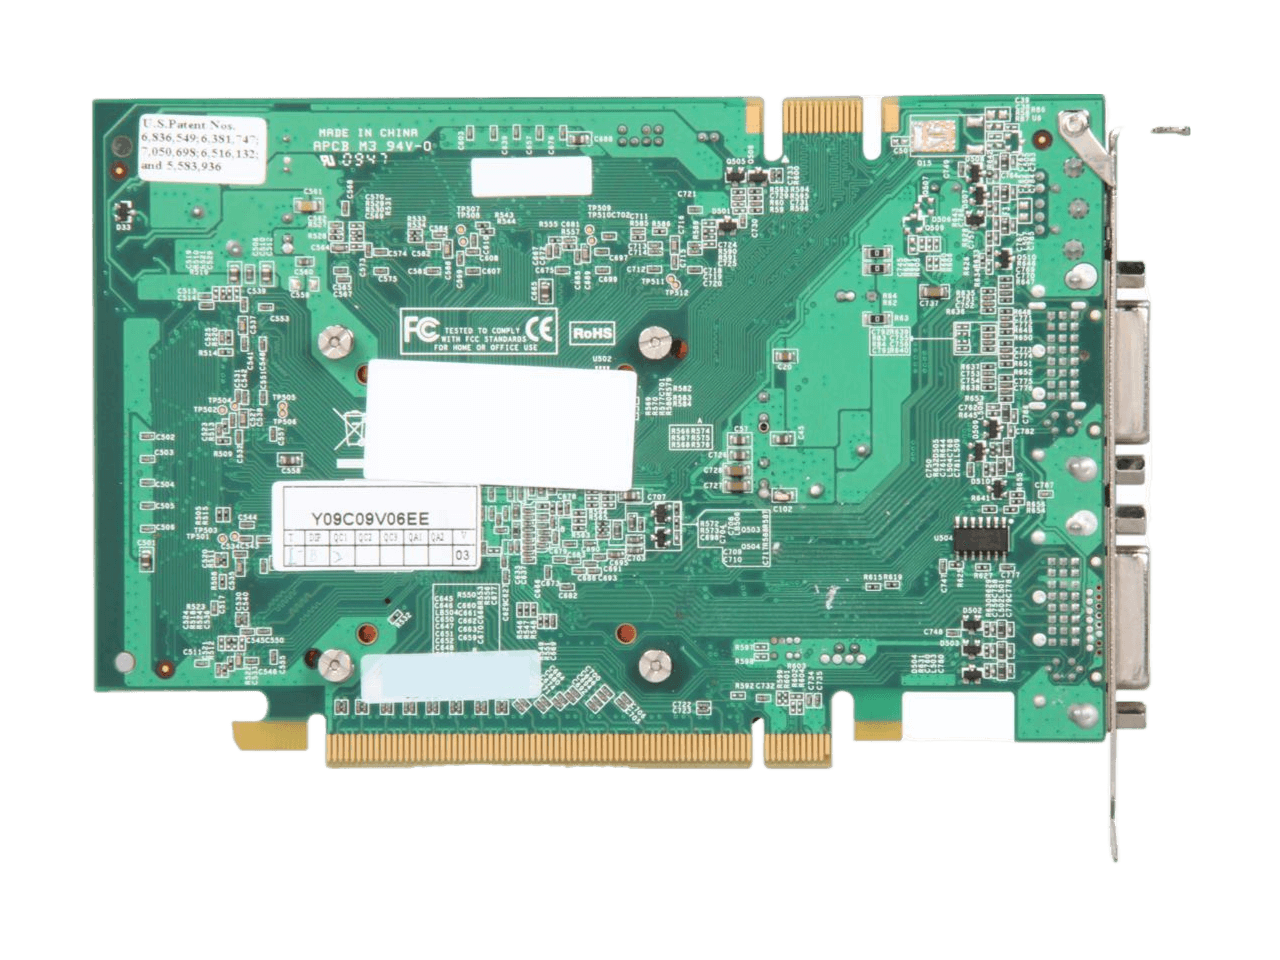 EVGA GeForce 9400 GT 1GB DDR2 PCI Express 2.0 x16 SLI Support Video Card 01G-P3-N945-RX